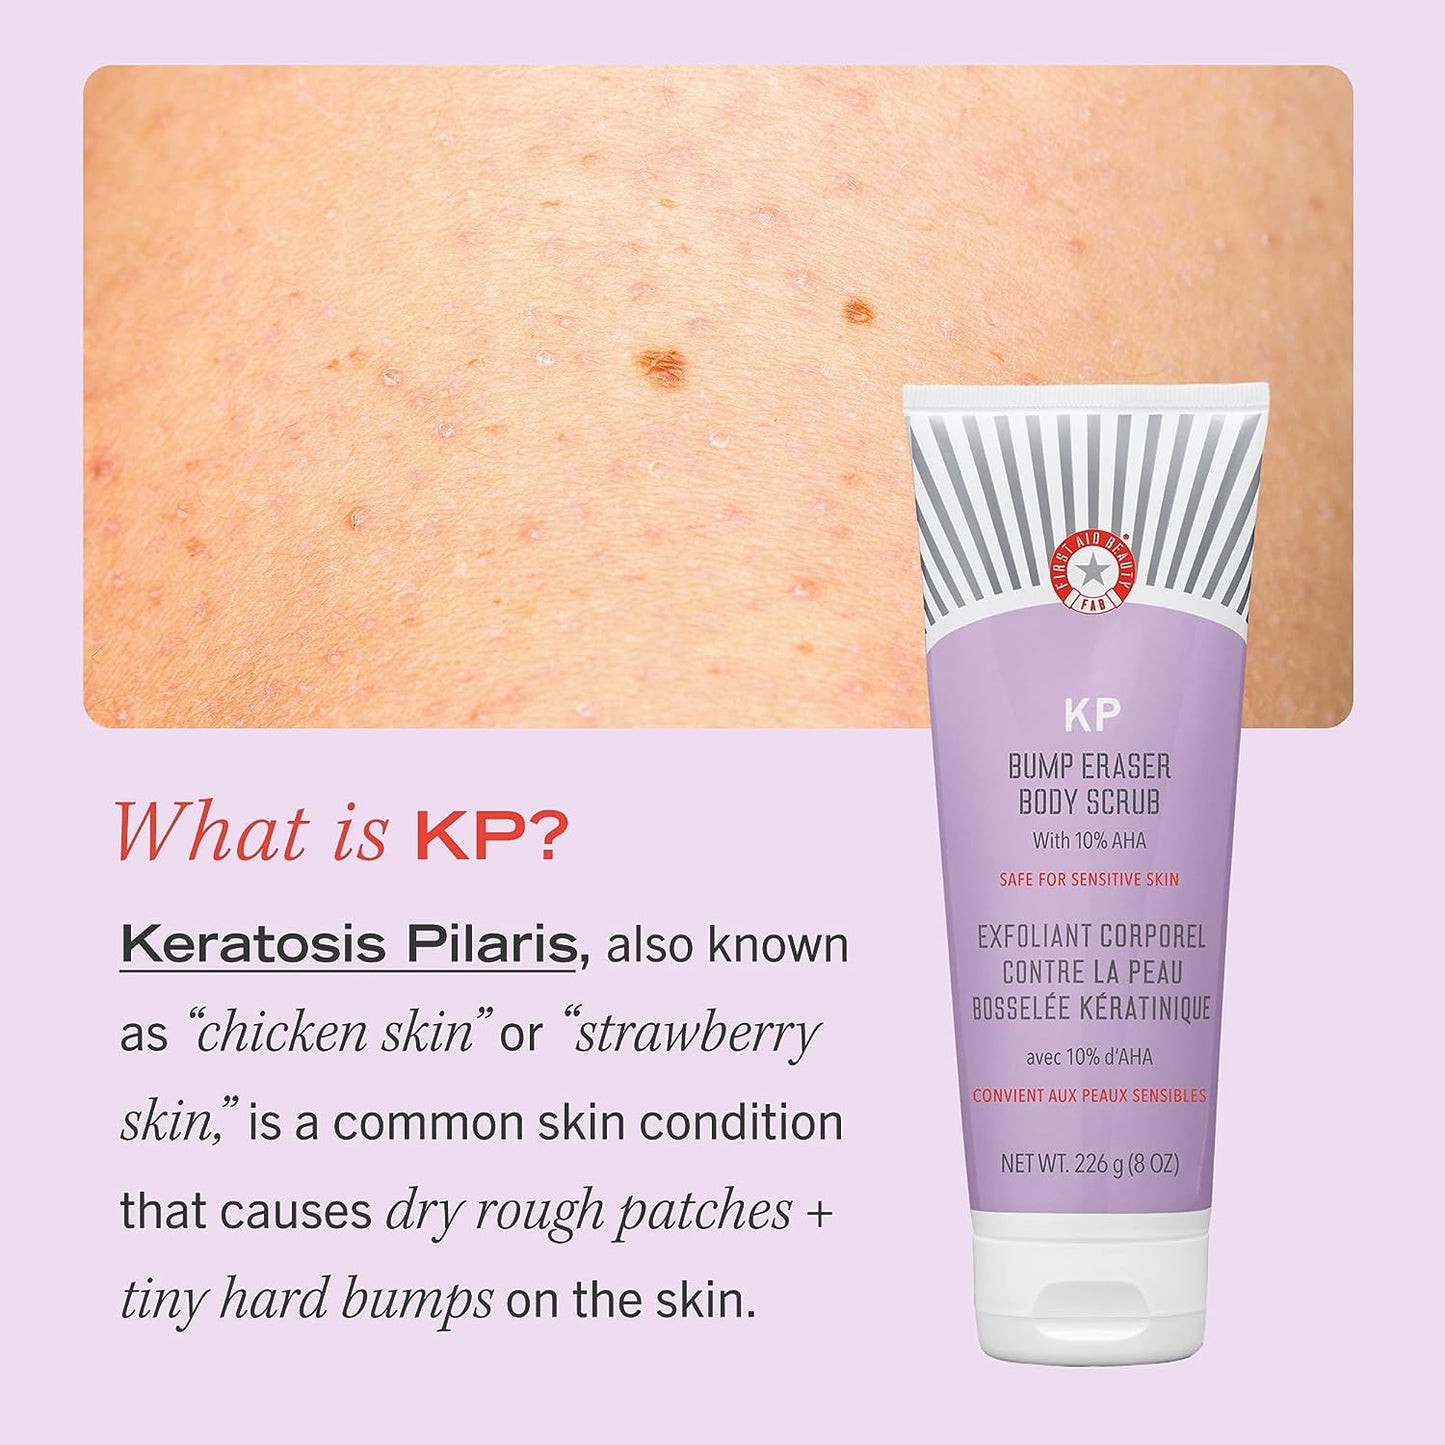 KP Bump Eraser Body Scrub Exfoliant for Keratosis Pilaris with 10% AHA 2 Oz.